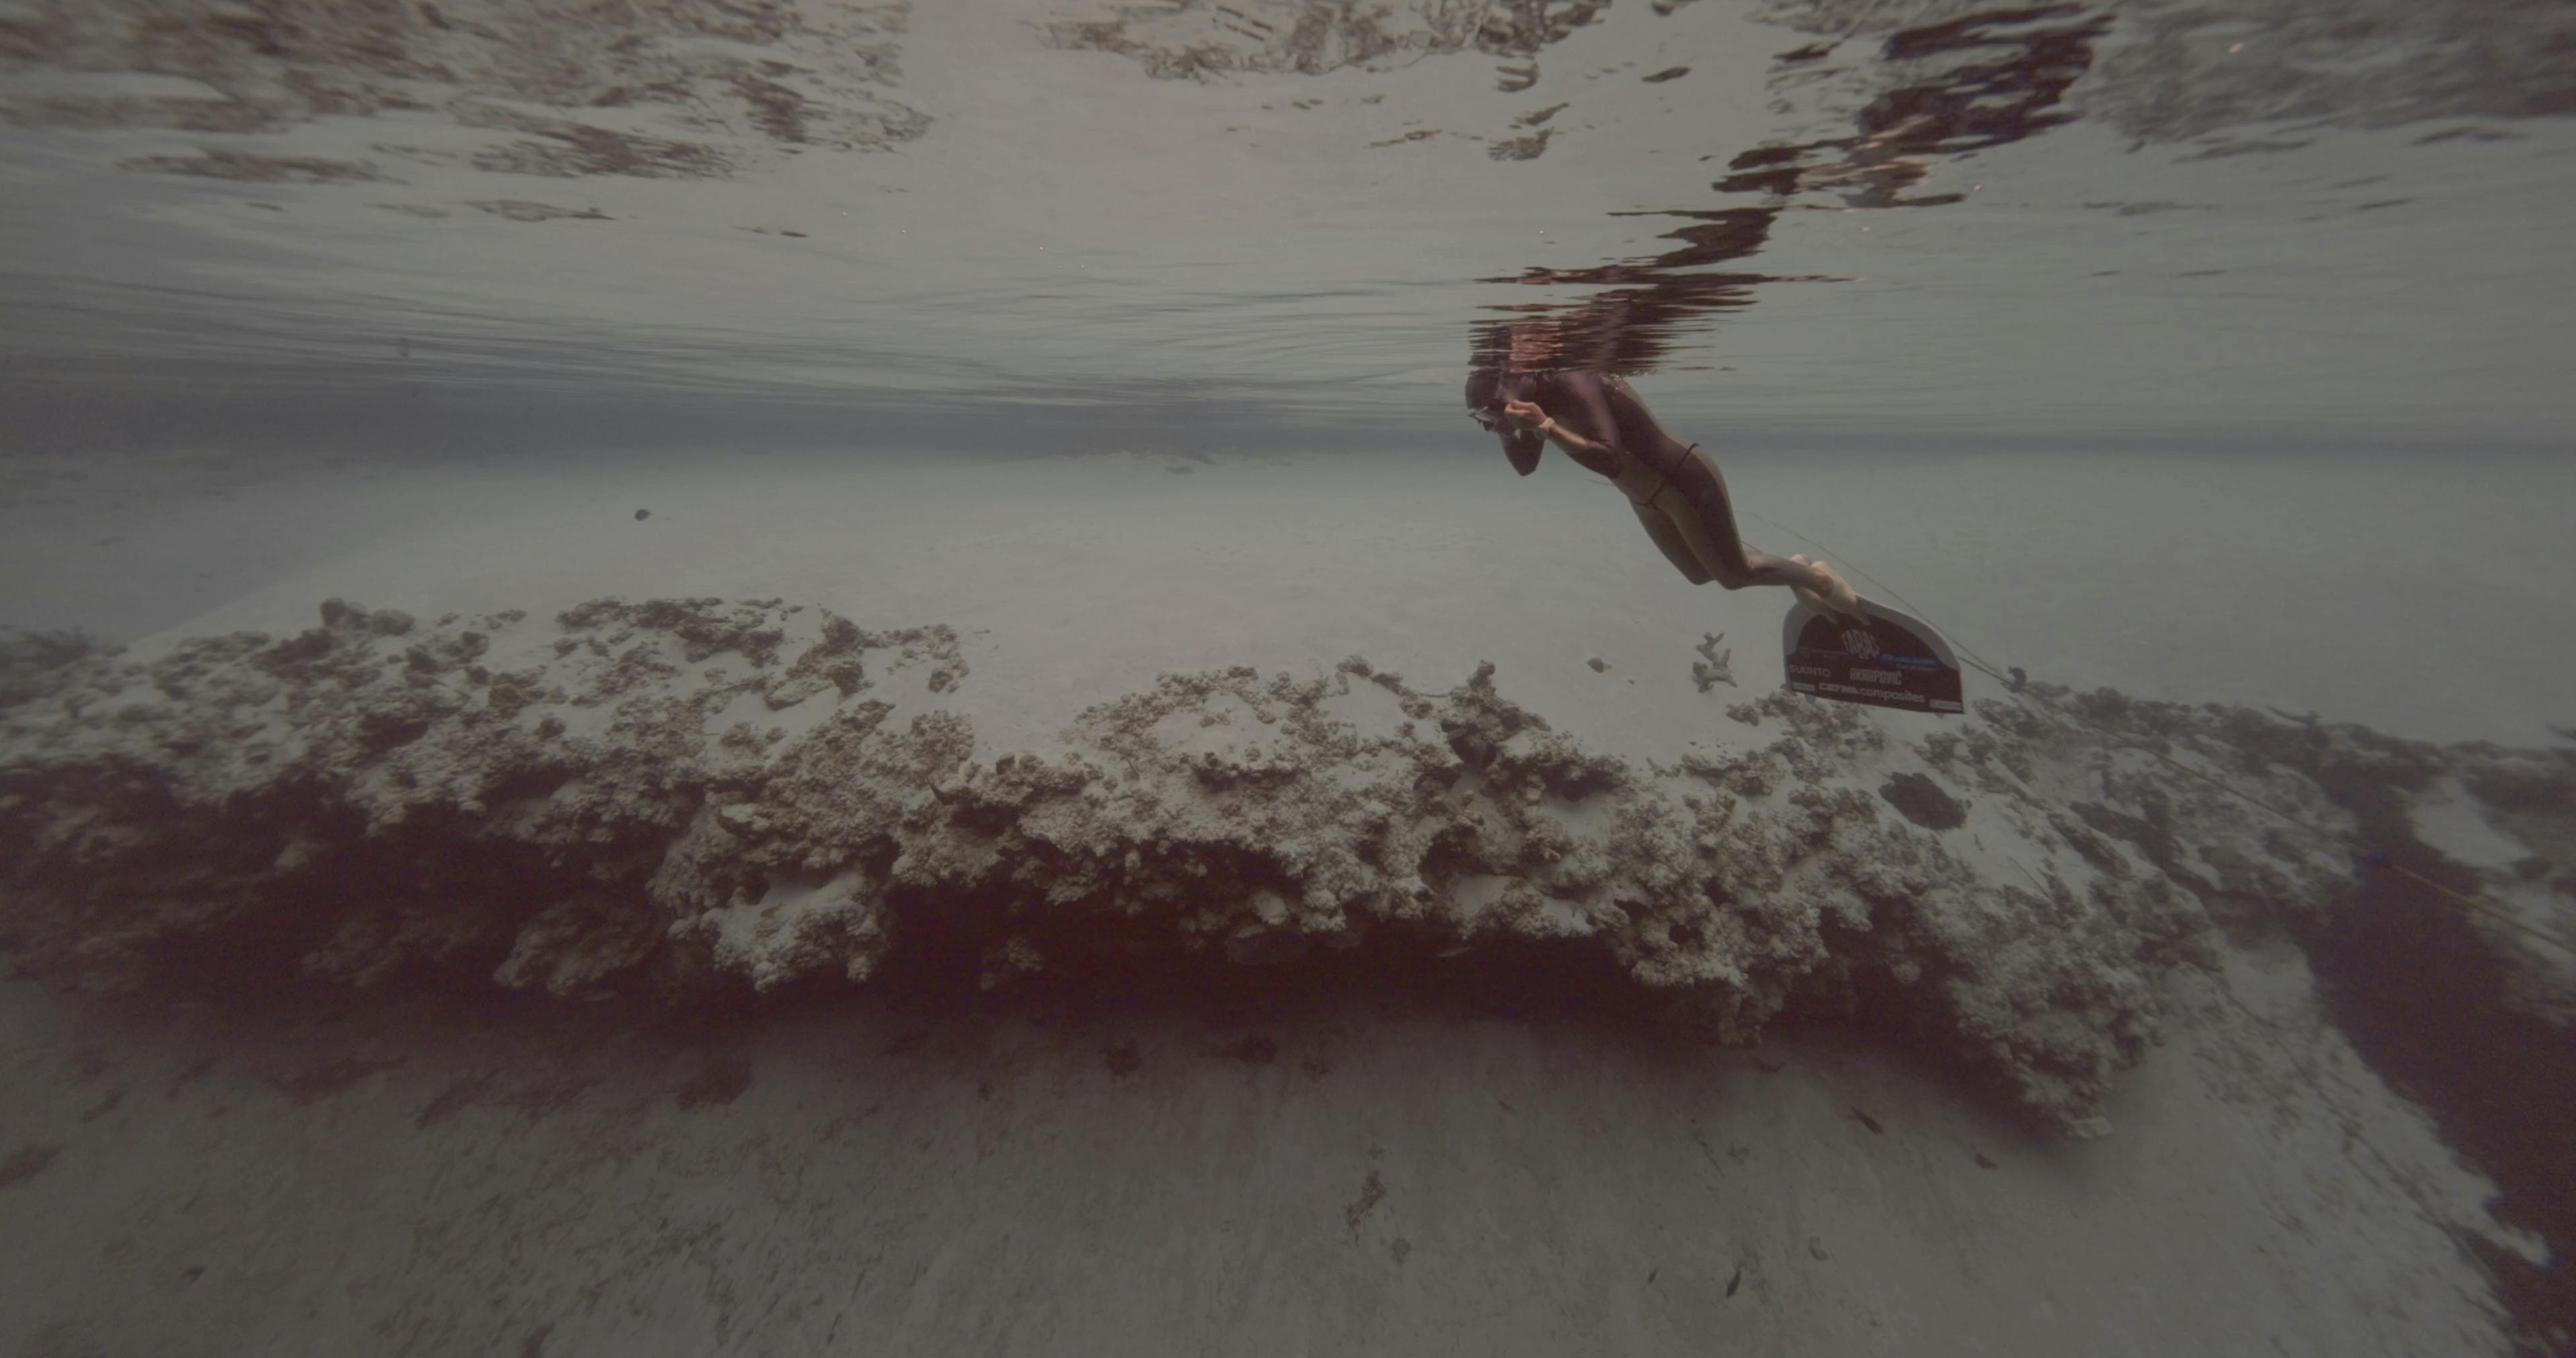 Hero video. A video of the diver, Alenka Artnik, underwater near a coral reef.